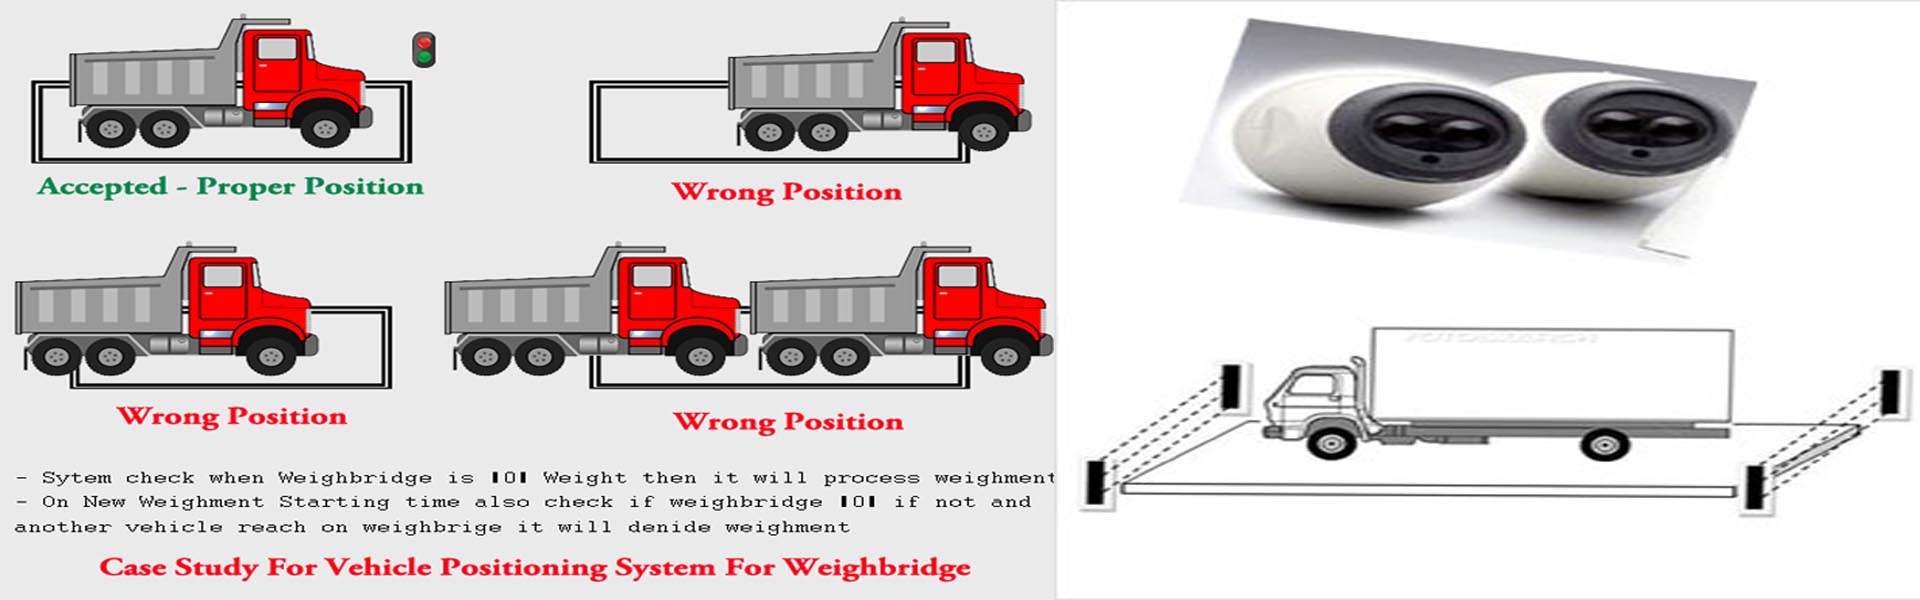 Weighbridge Vehicle Positioning System